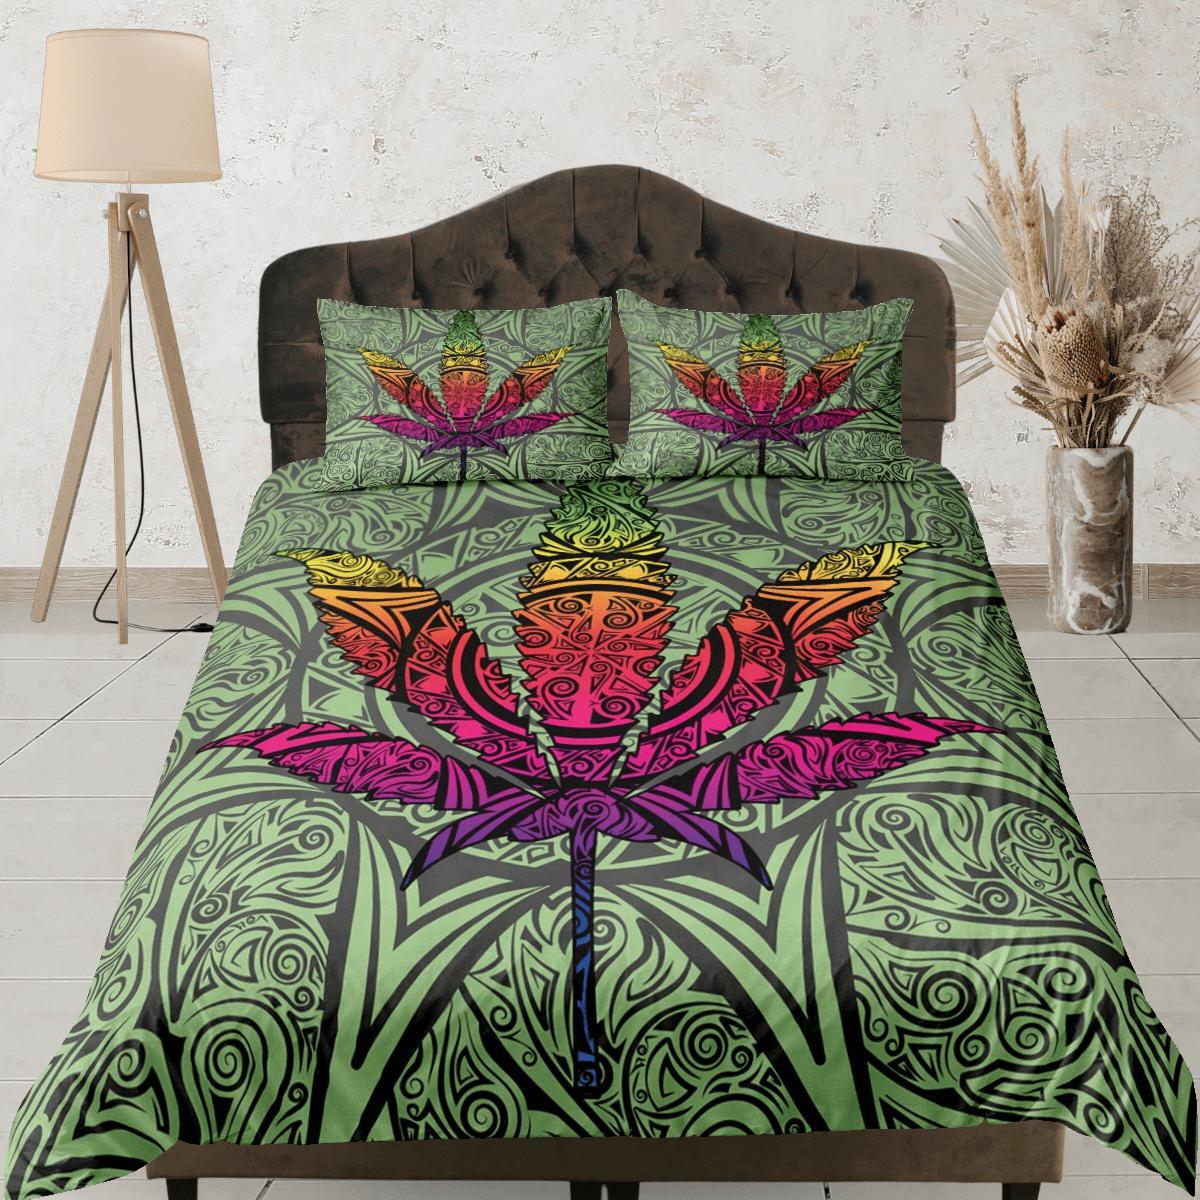 daintyduvet Psychedelic Trippy Duvet Cover, Leaf Decor, Hippie Dorm Bedding Pillowcase, Colorful King Duvet Full Queen Duvet Bedspread Twin, Single